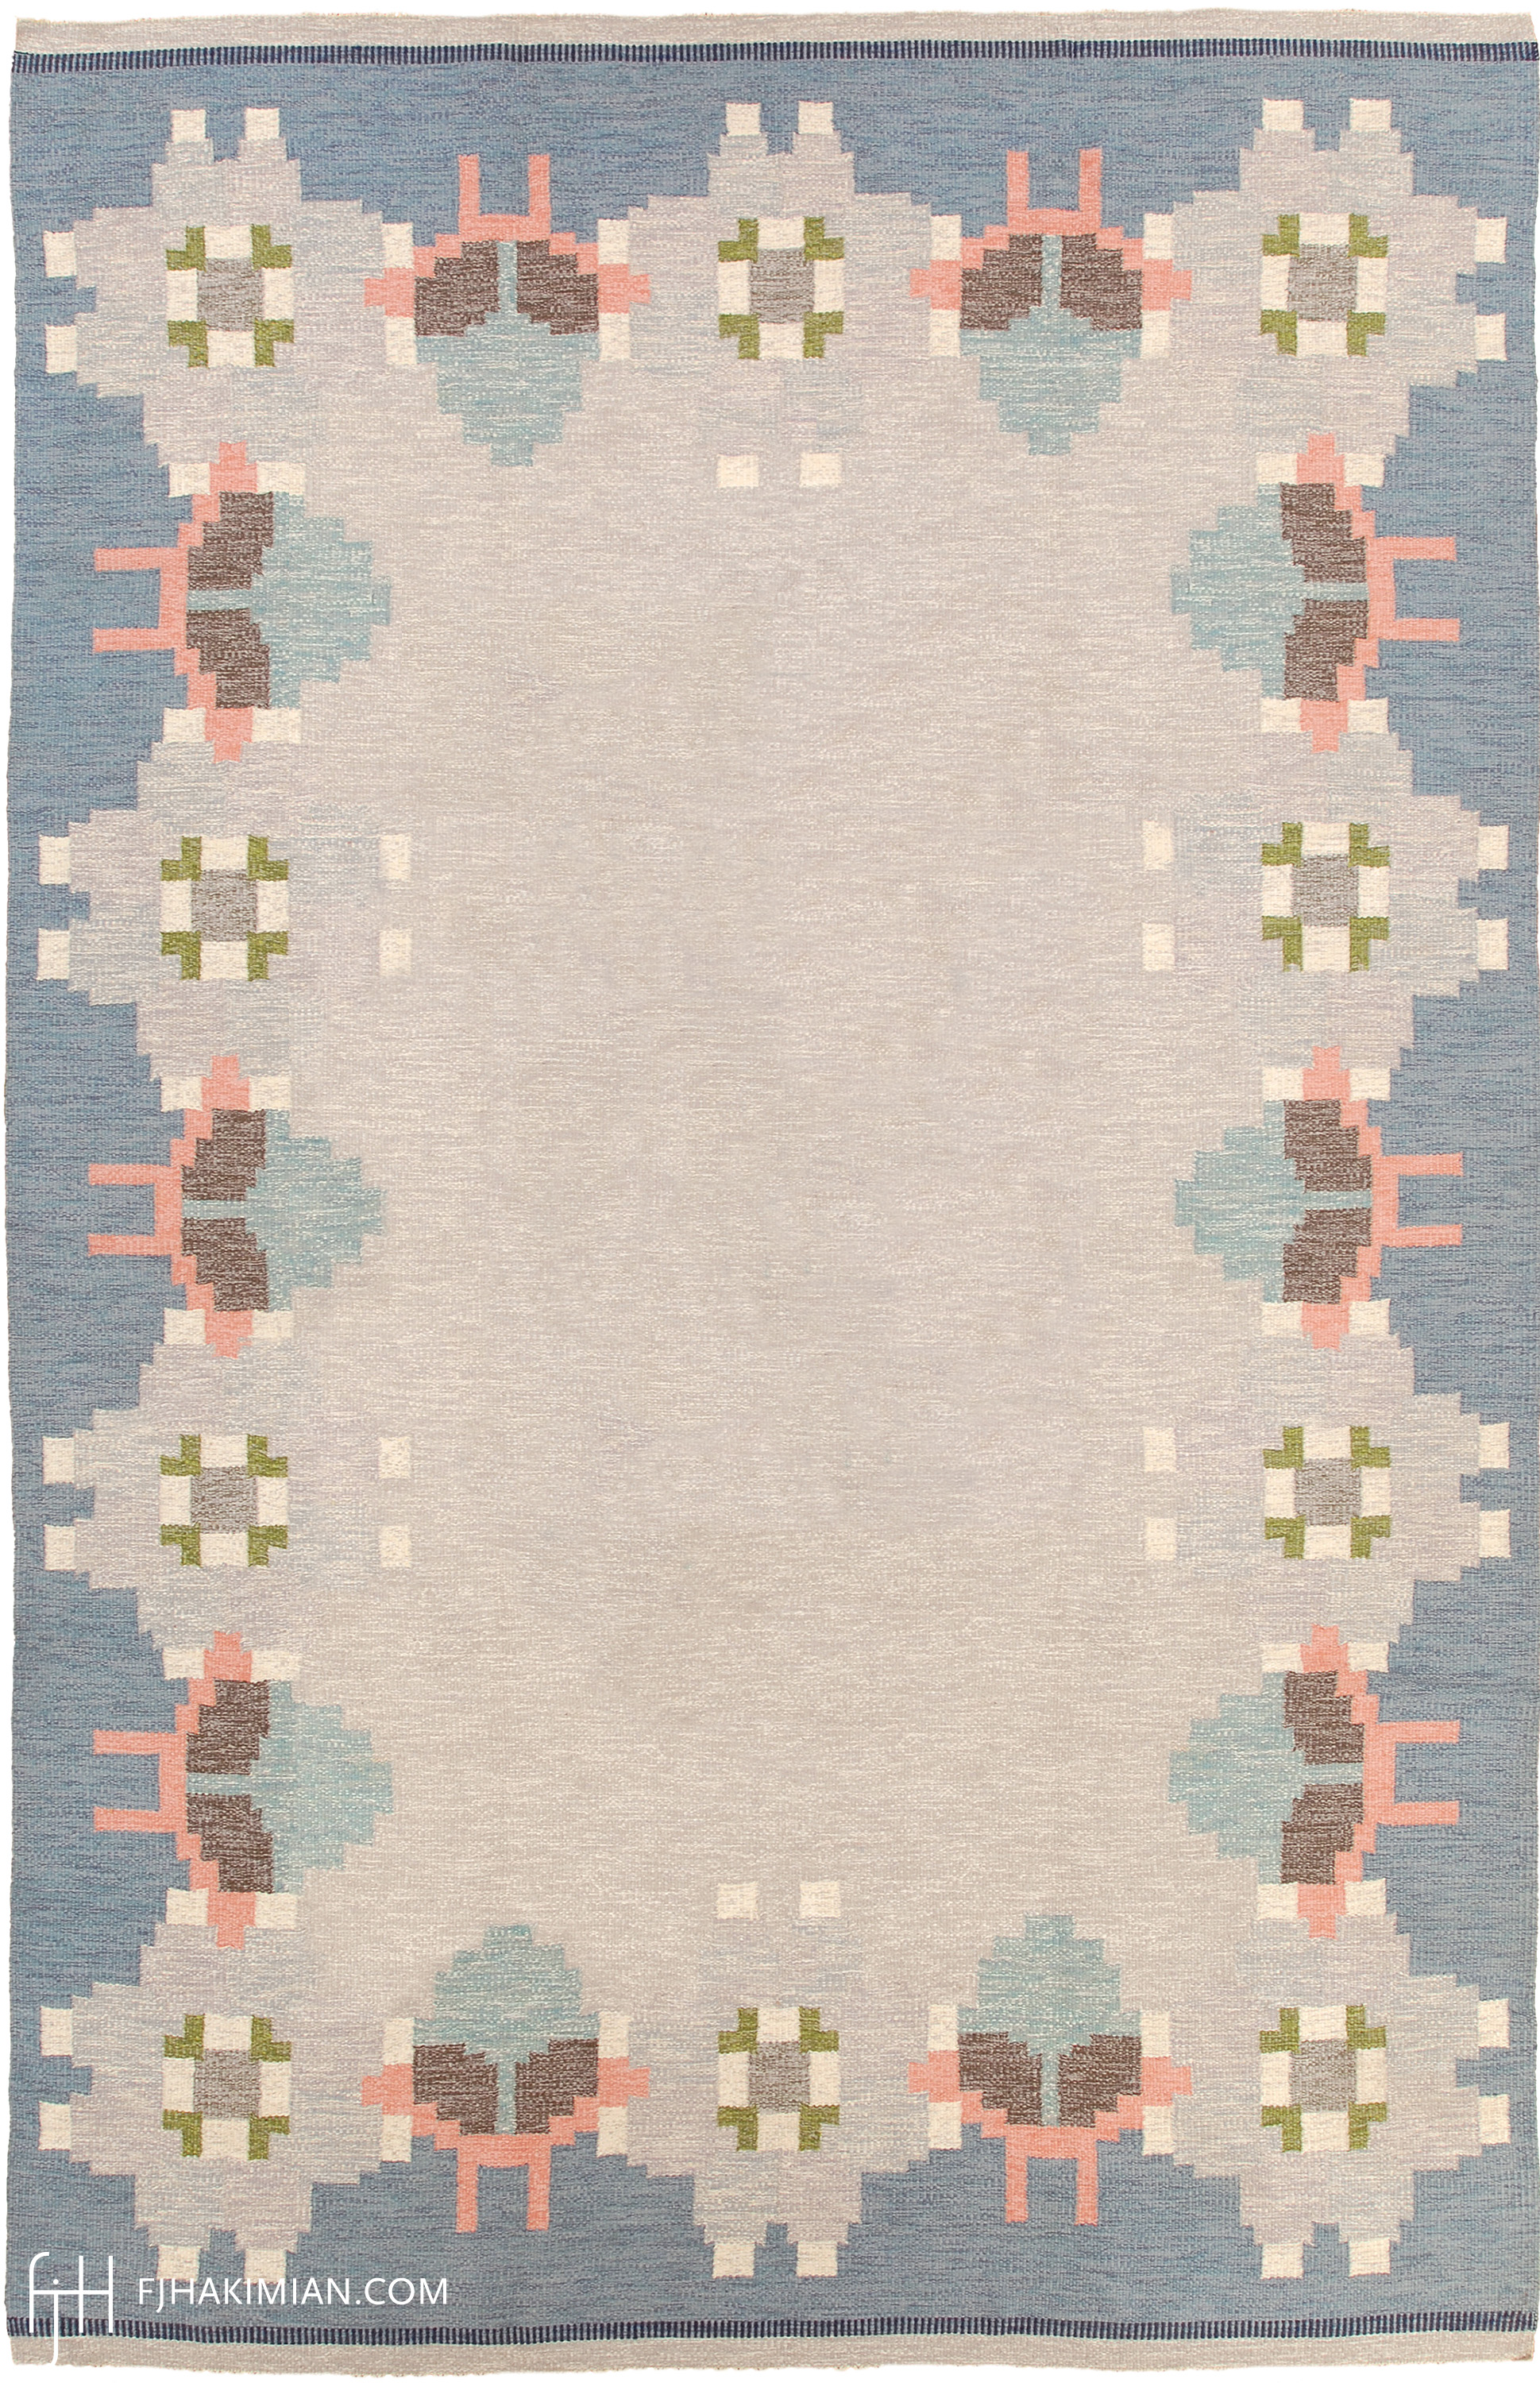 Silo Design | Custom Swedish Inspired Flat Weave Rug | FJ Hakimian | Carpet Gallery in NY